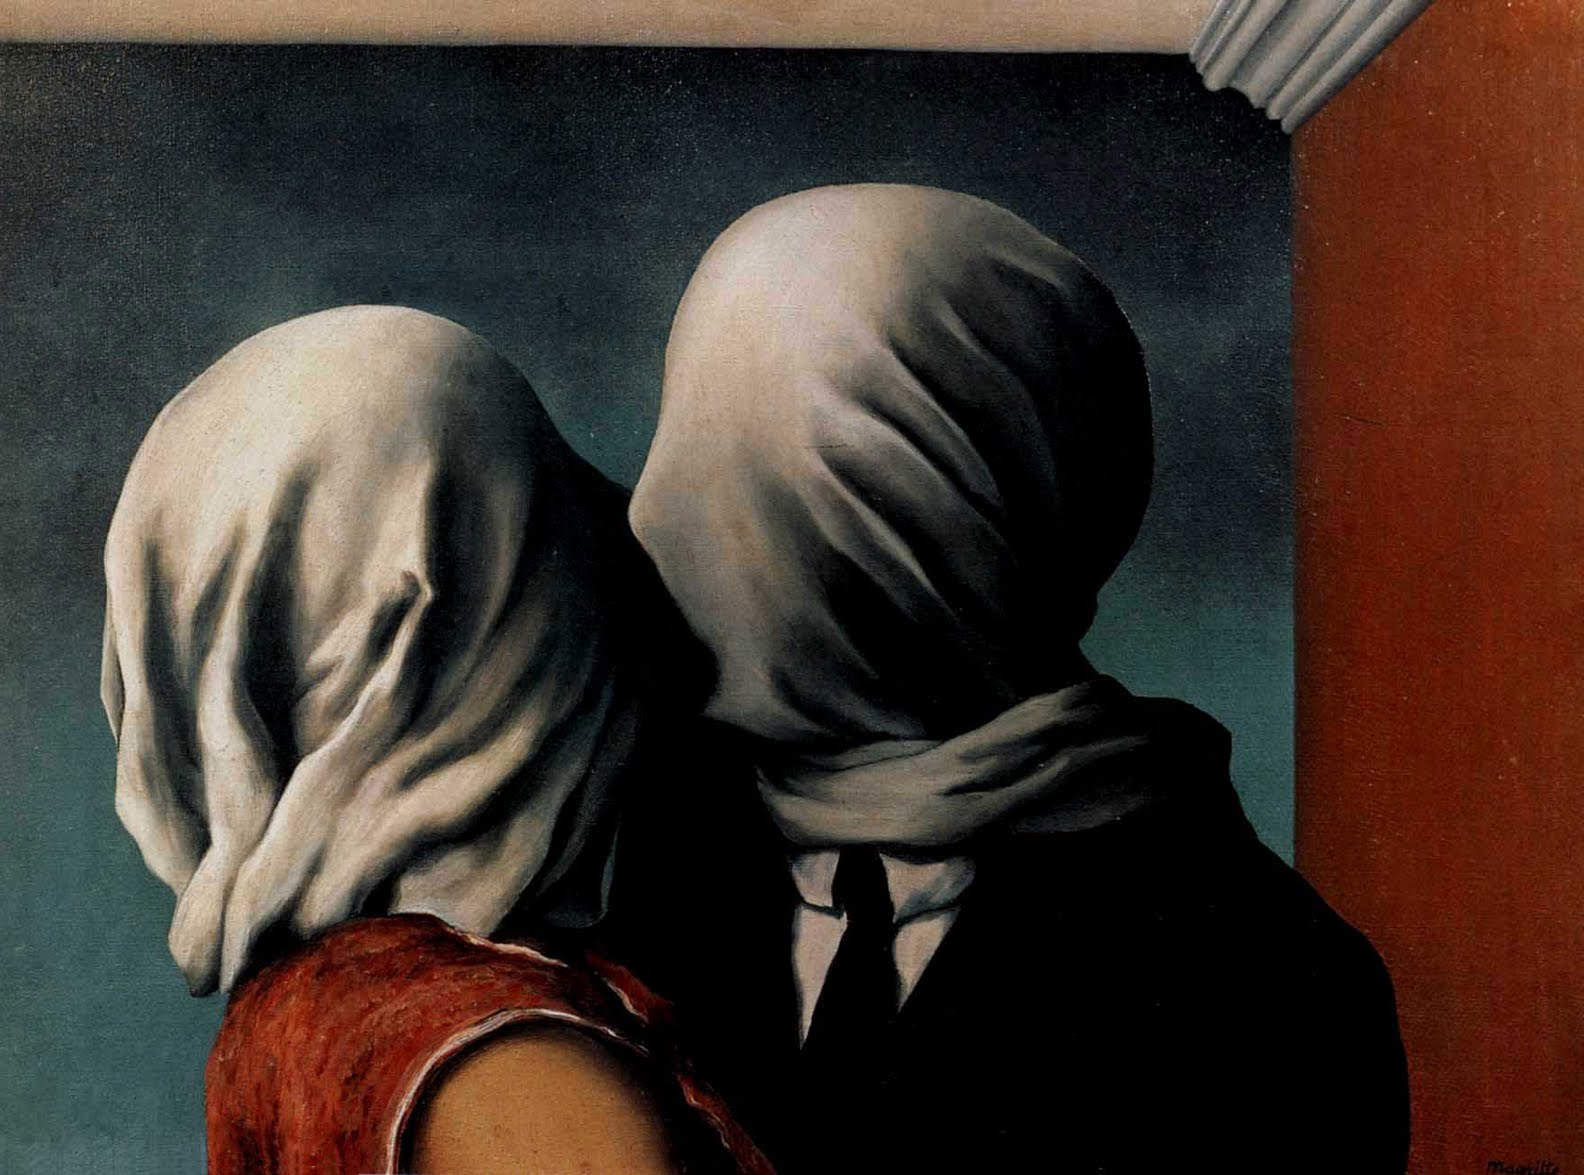 Hooded lovers